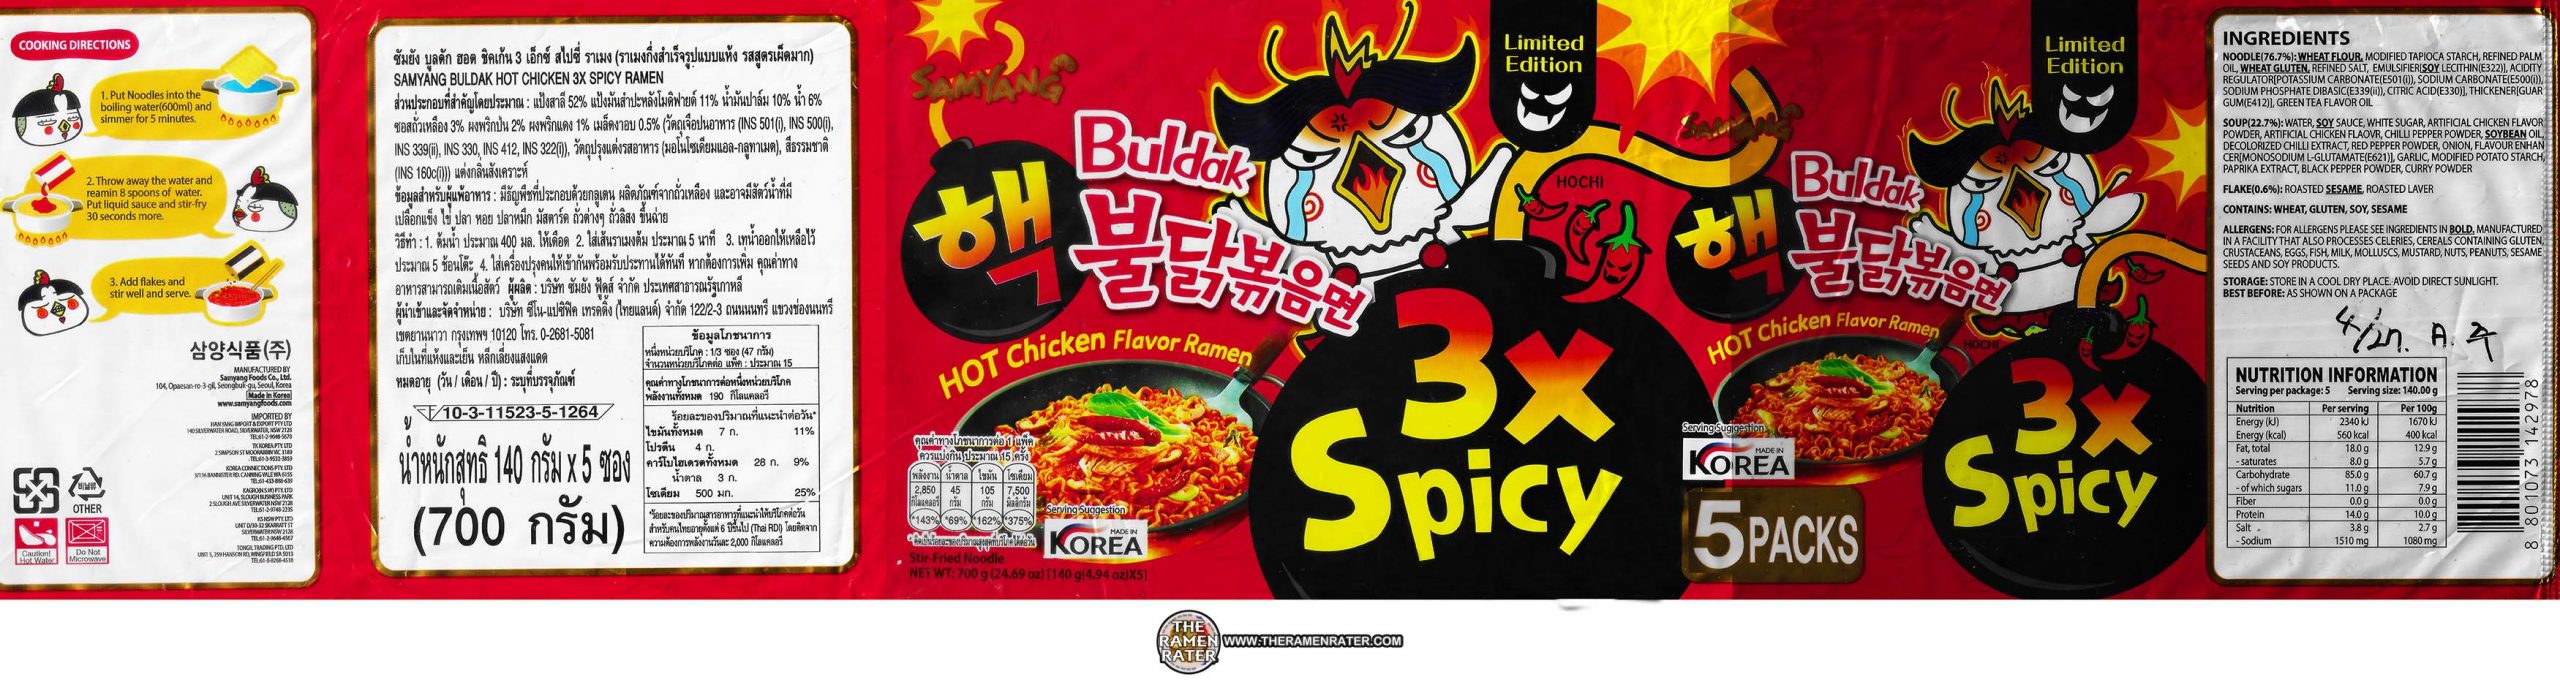 2560px x 685px - 3637: Samyang Buldak 3x Spicy HOT Chicken Flavor Ramen - Korea